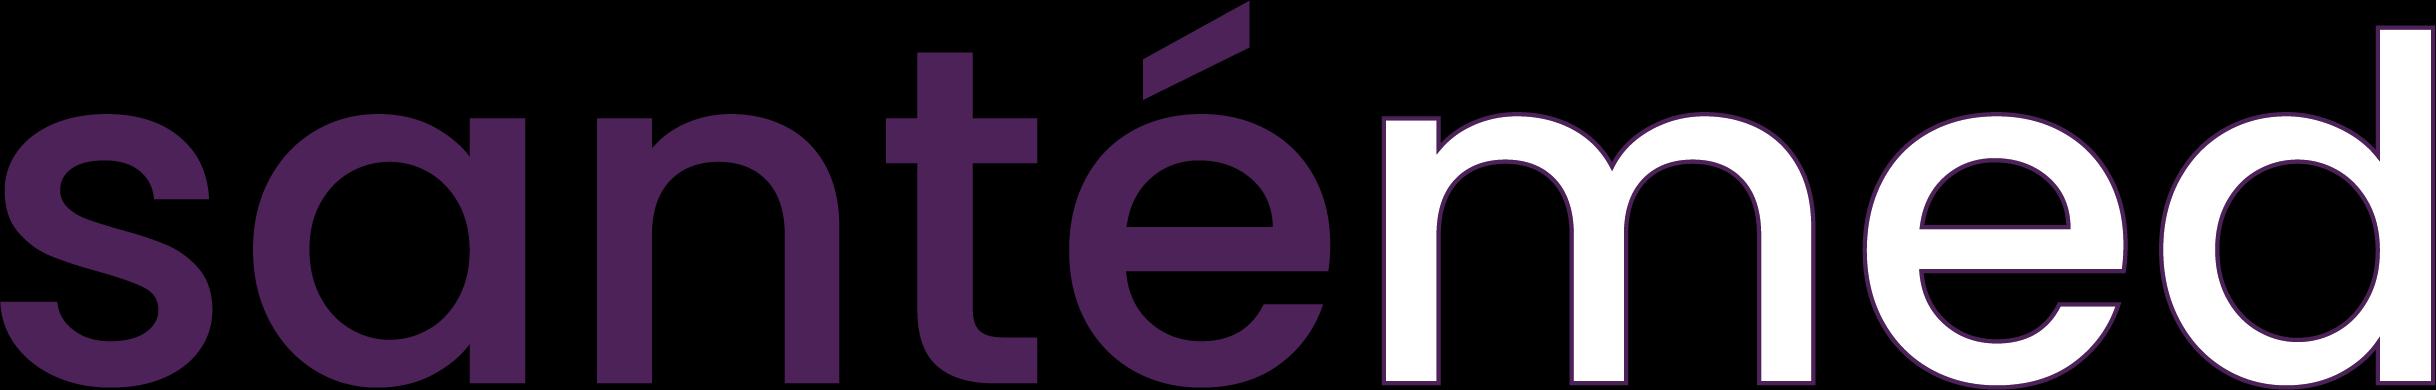 SantéMed_logo